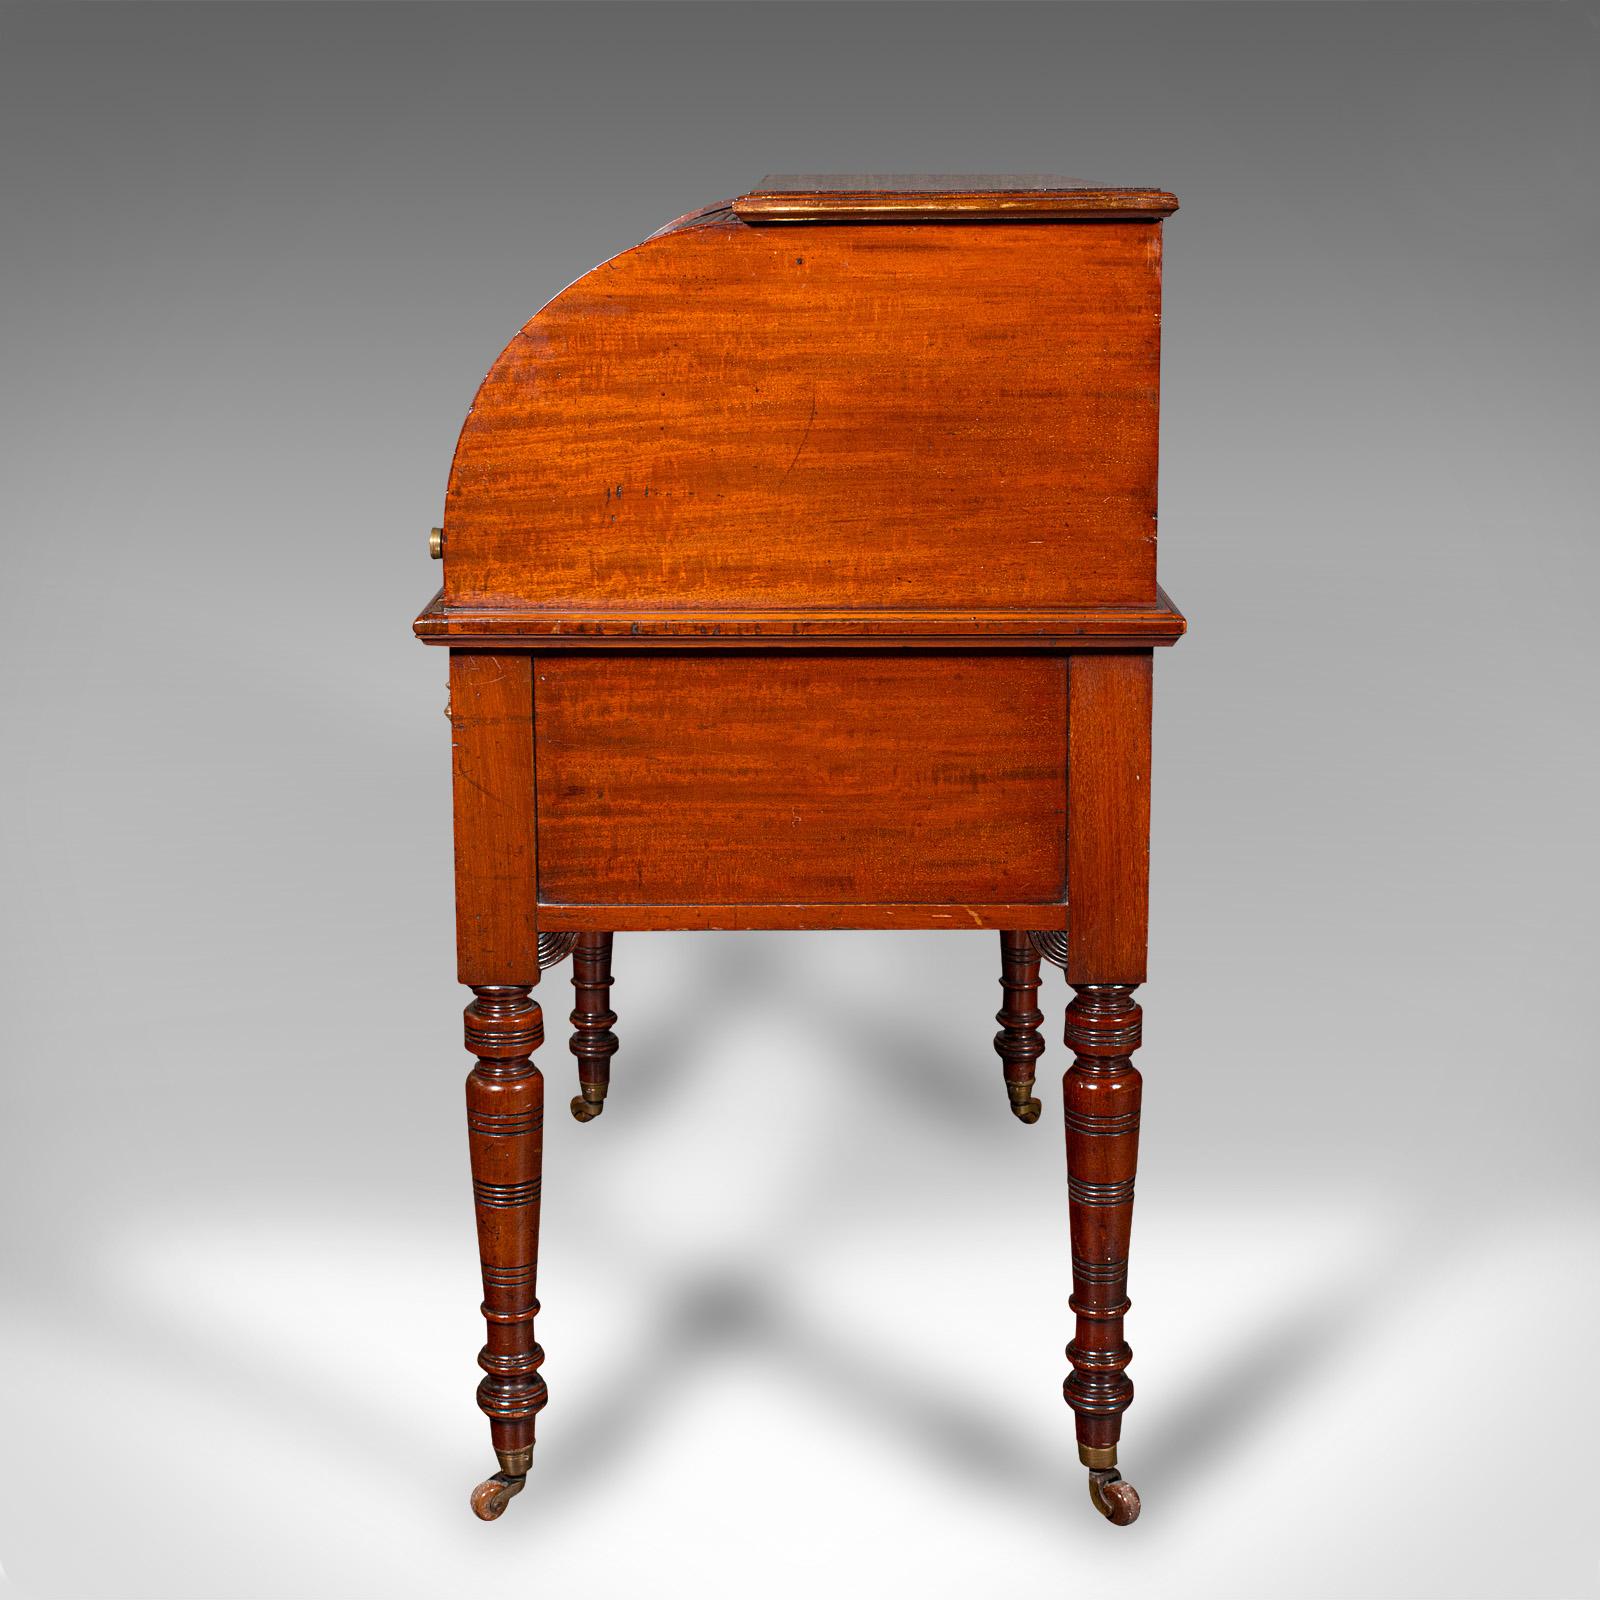 19th Century Antique Roll-Top Desk, English, Bureau, Aesthetic Period, Victorian, Circa 1880 For Sale